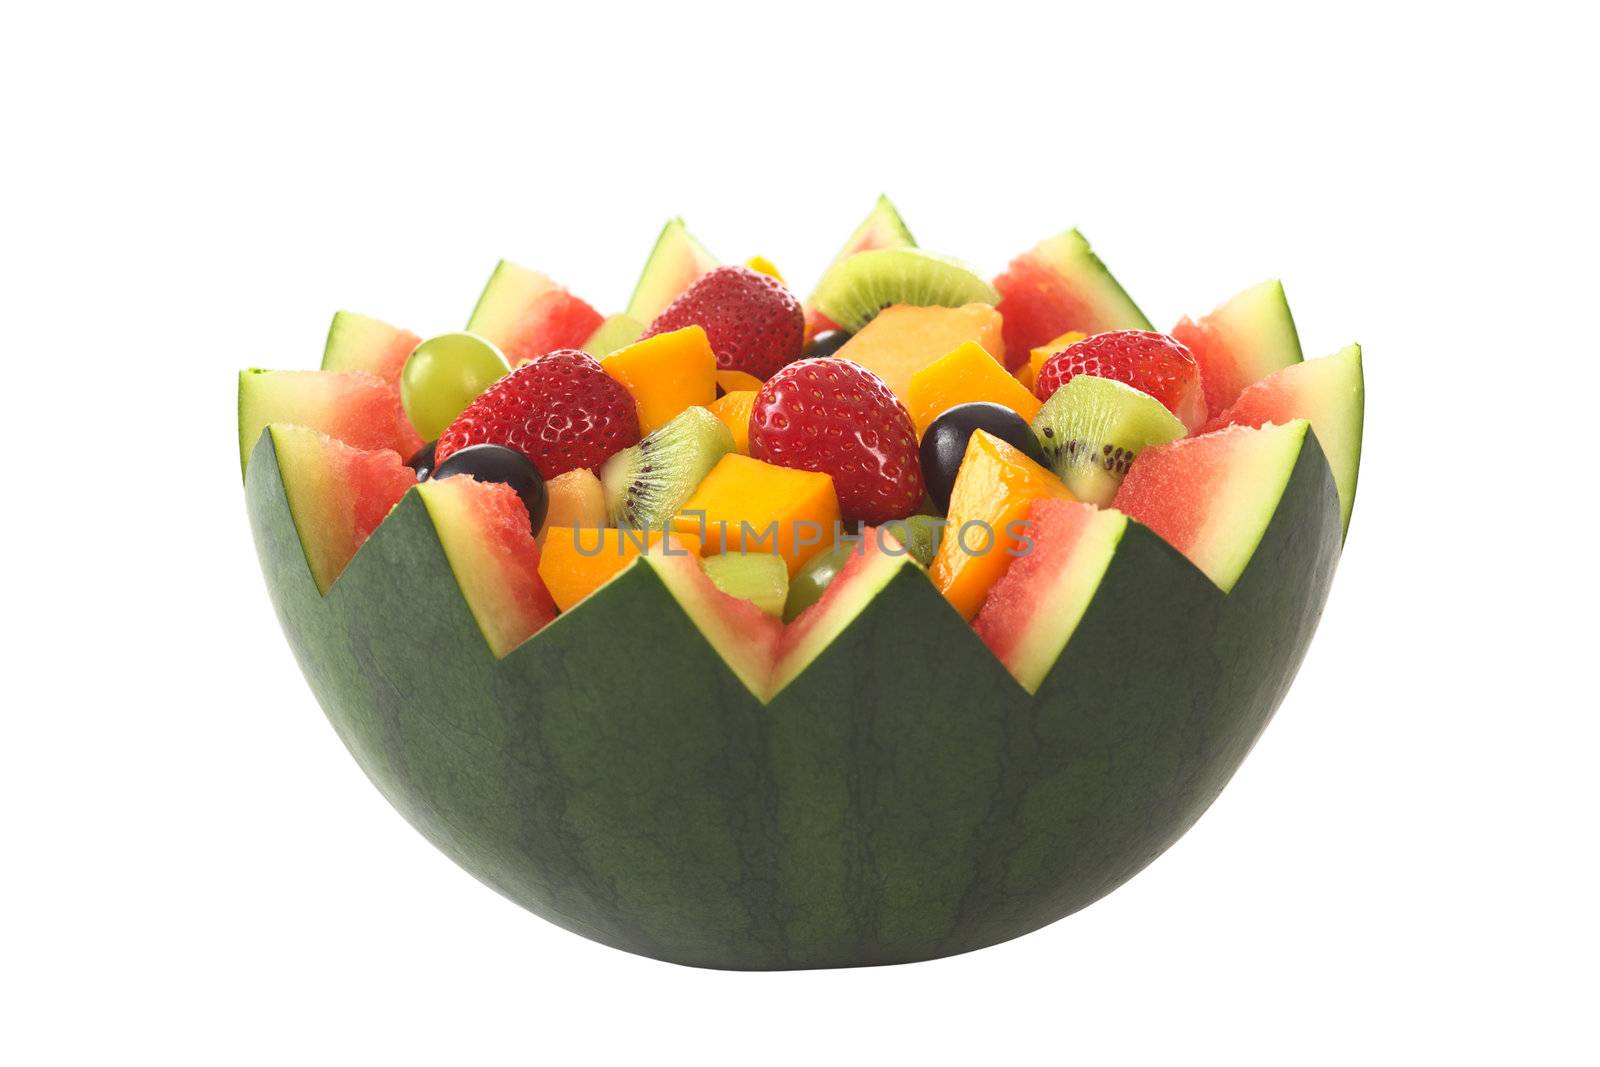 Fruit Salad in Melon Bowl by ildi